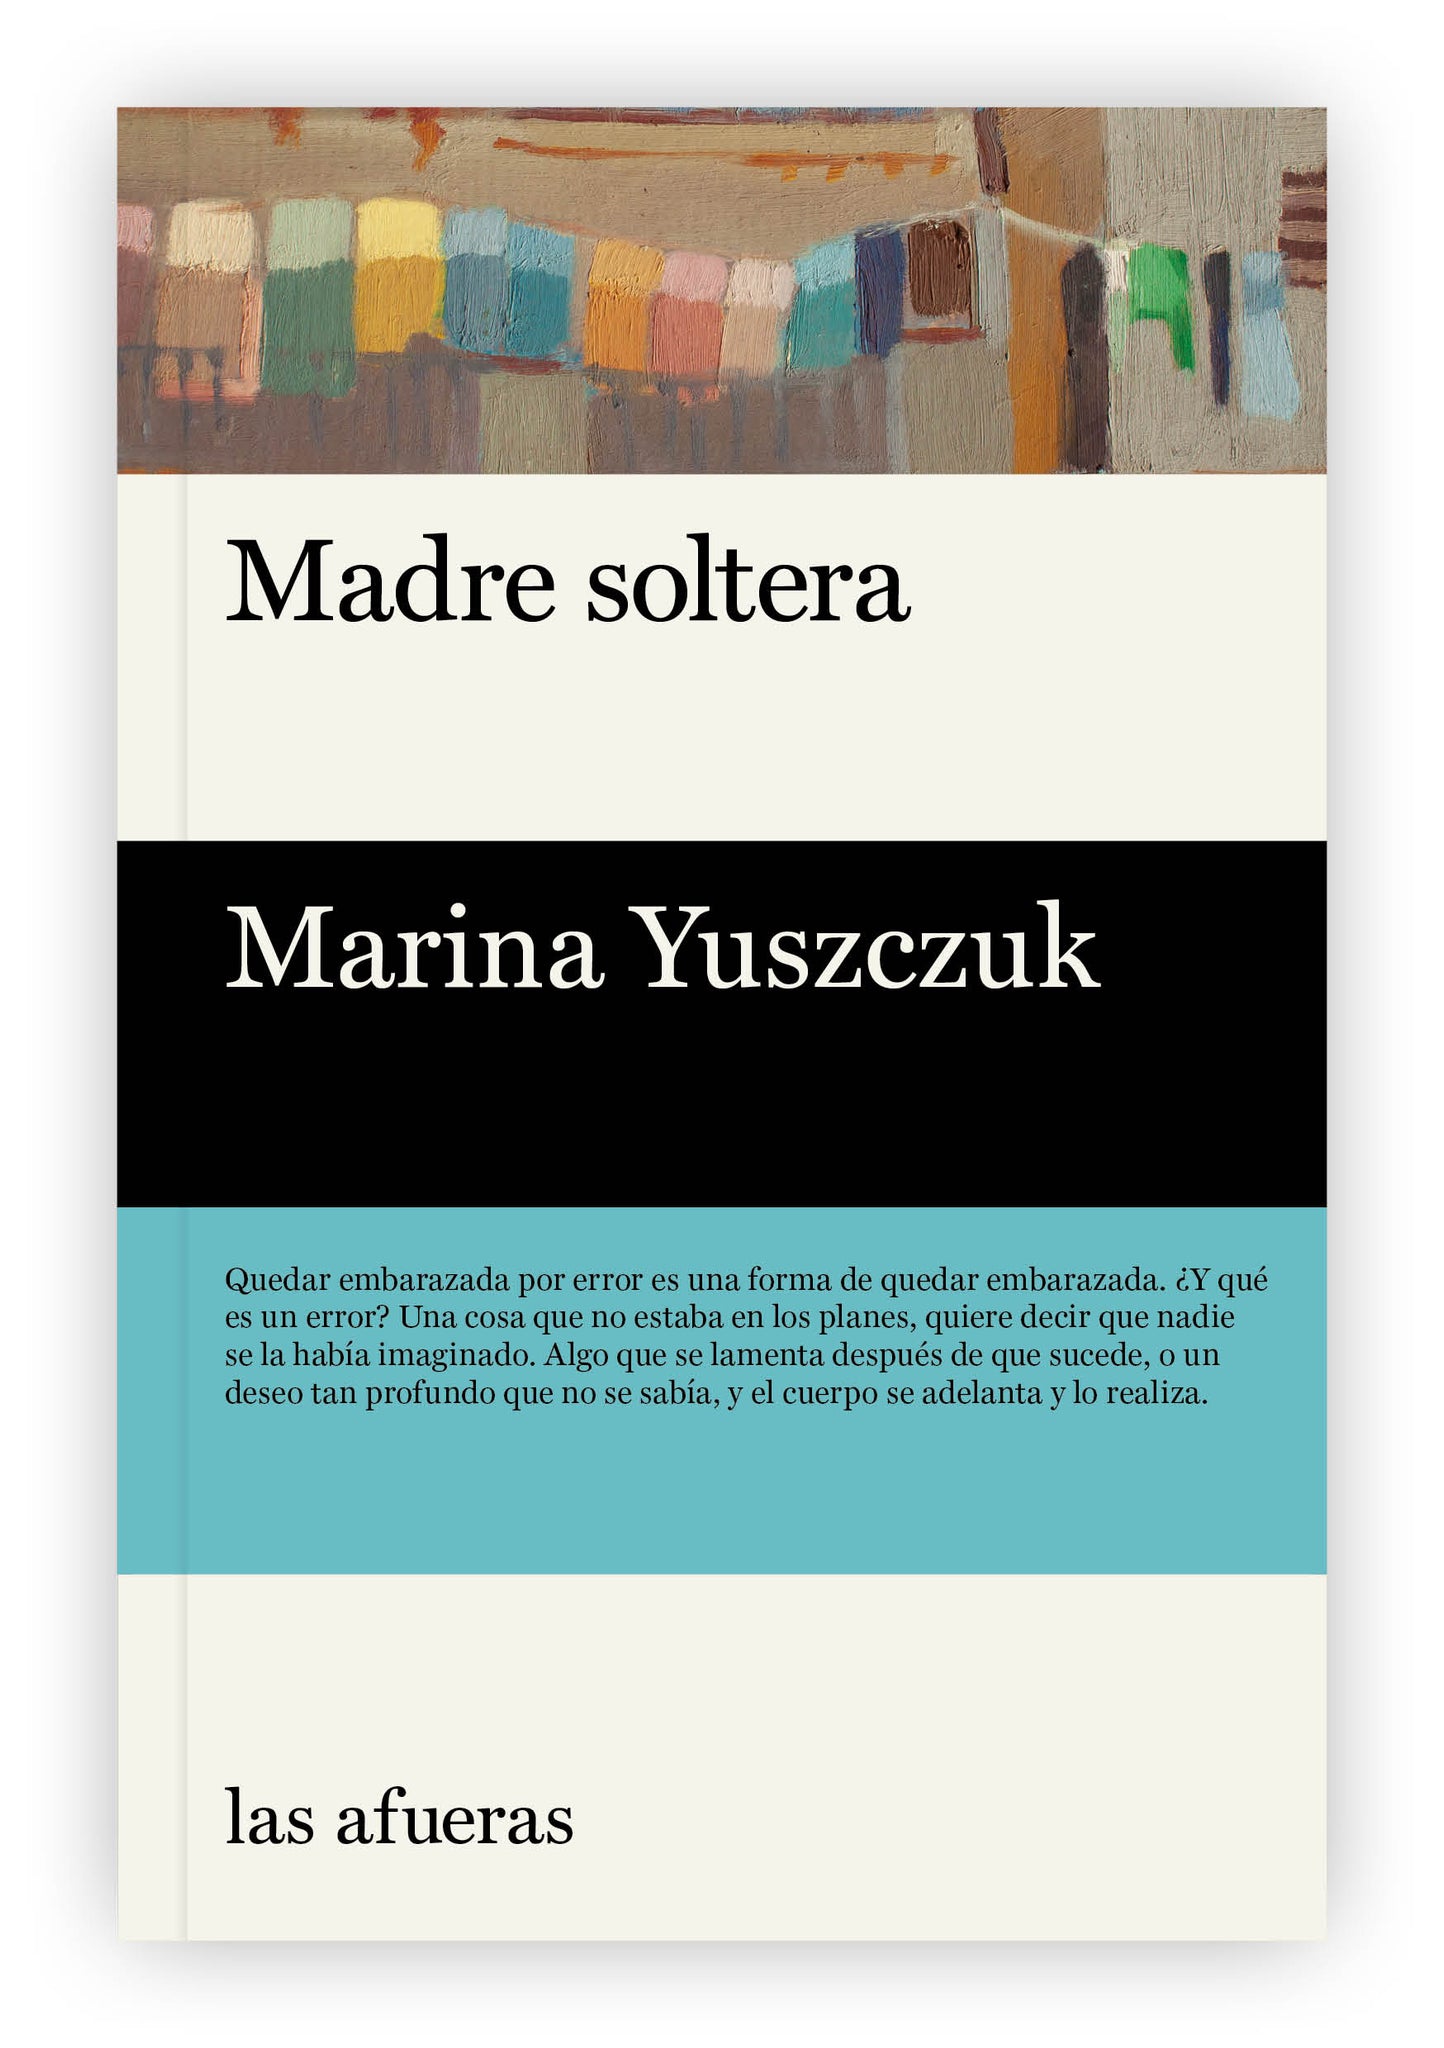 "Madre soltera" de Marina Yuszczuk